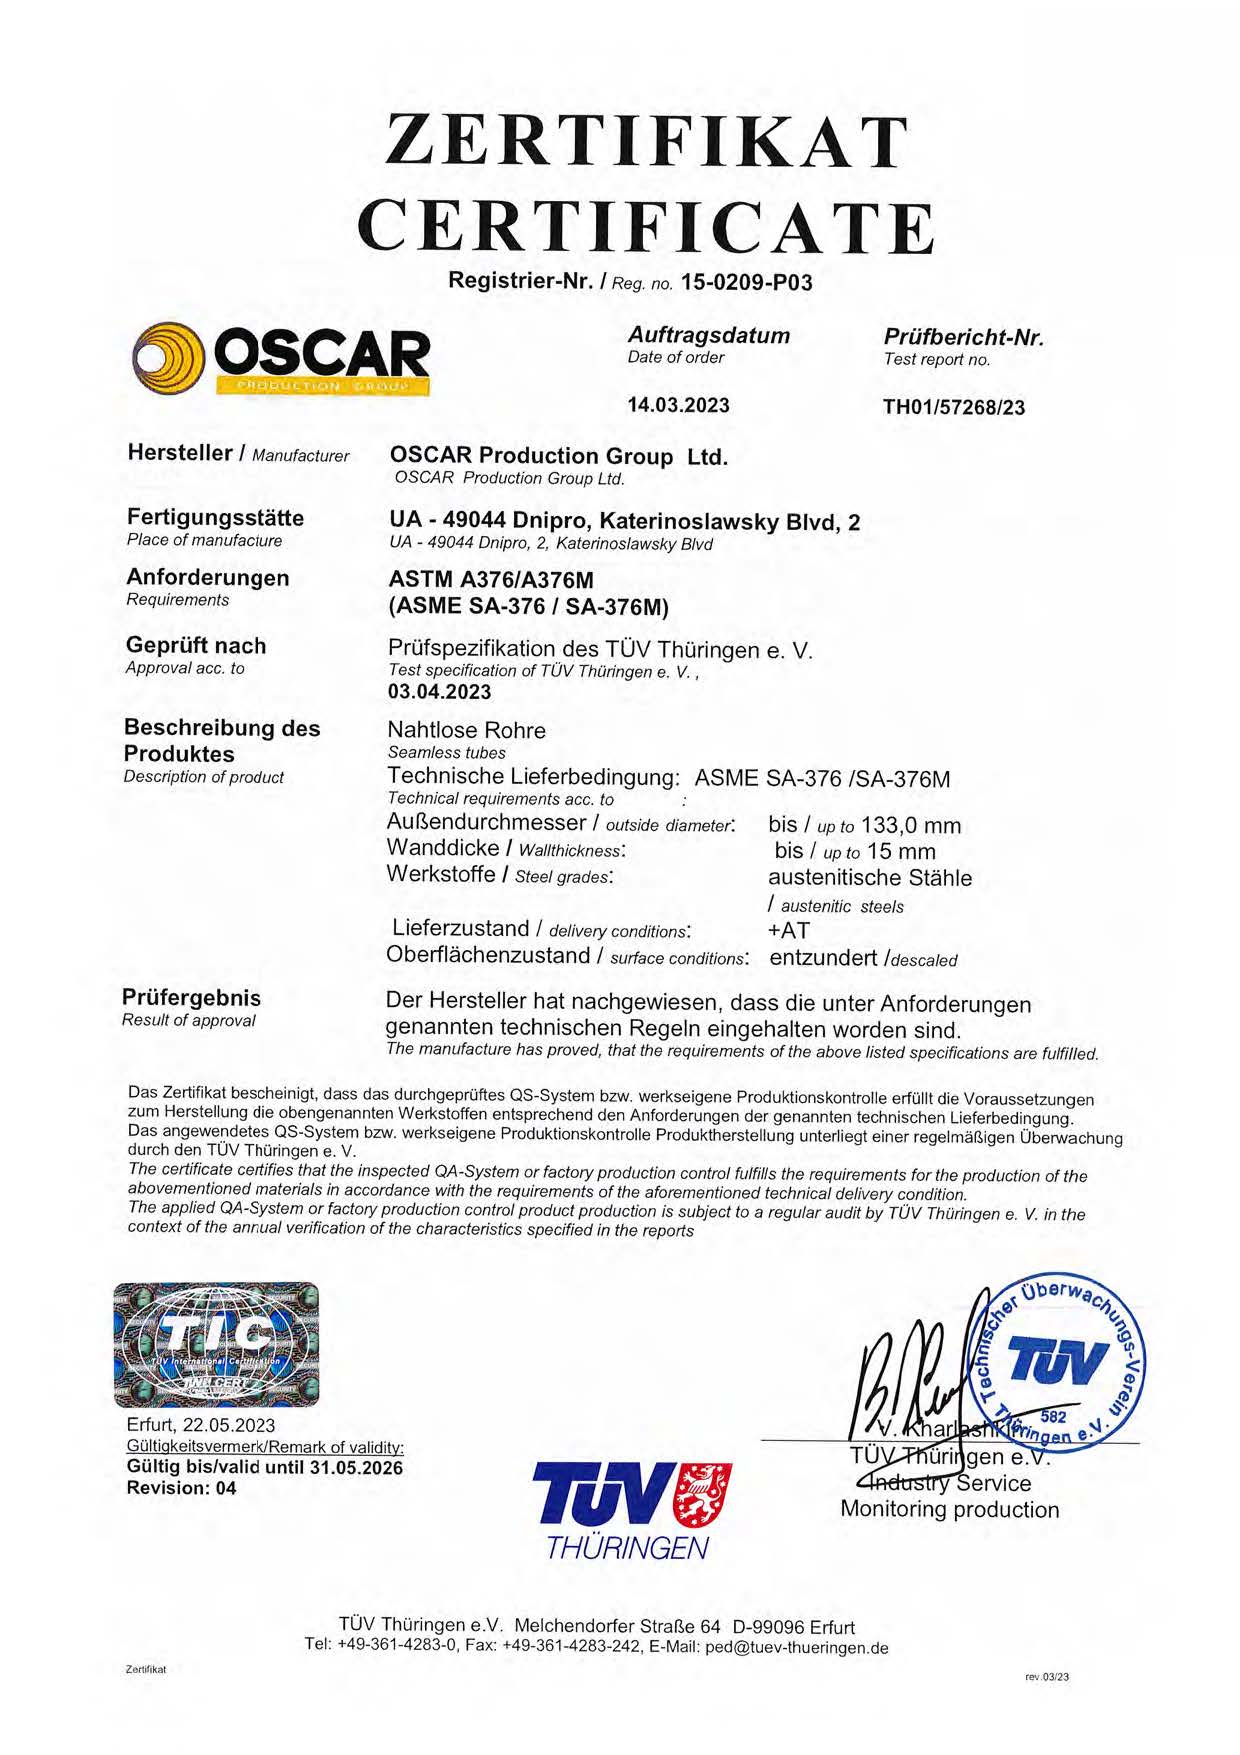 09 certificate ASTM ASME 376 de en